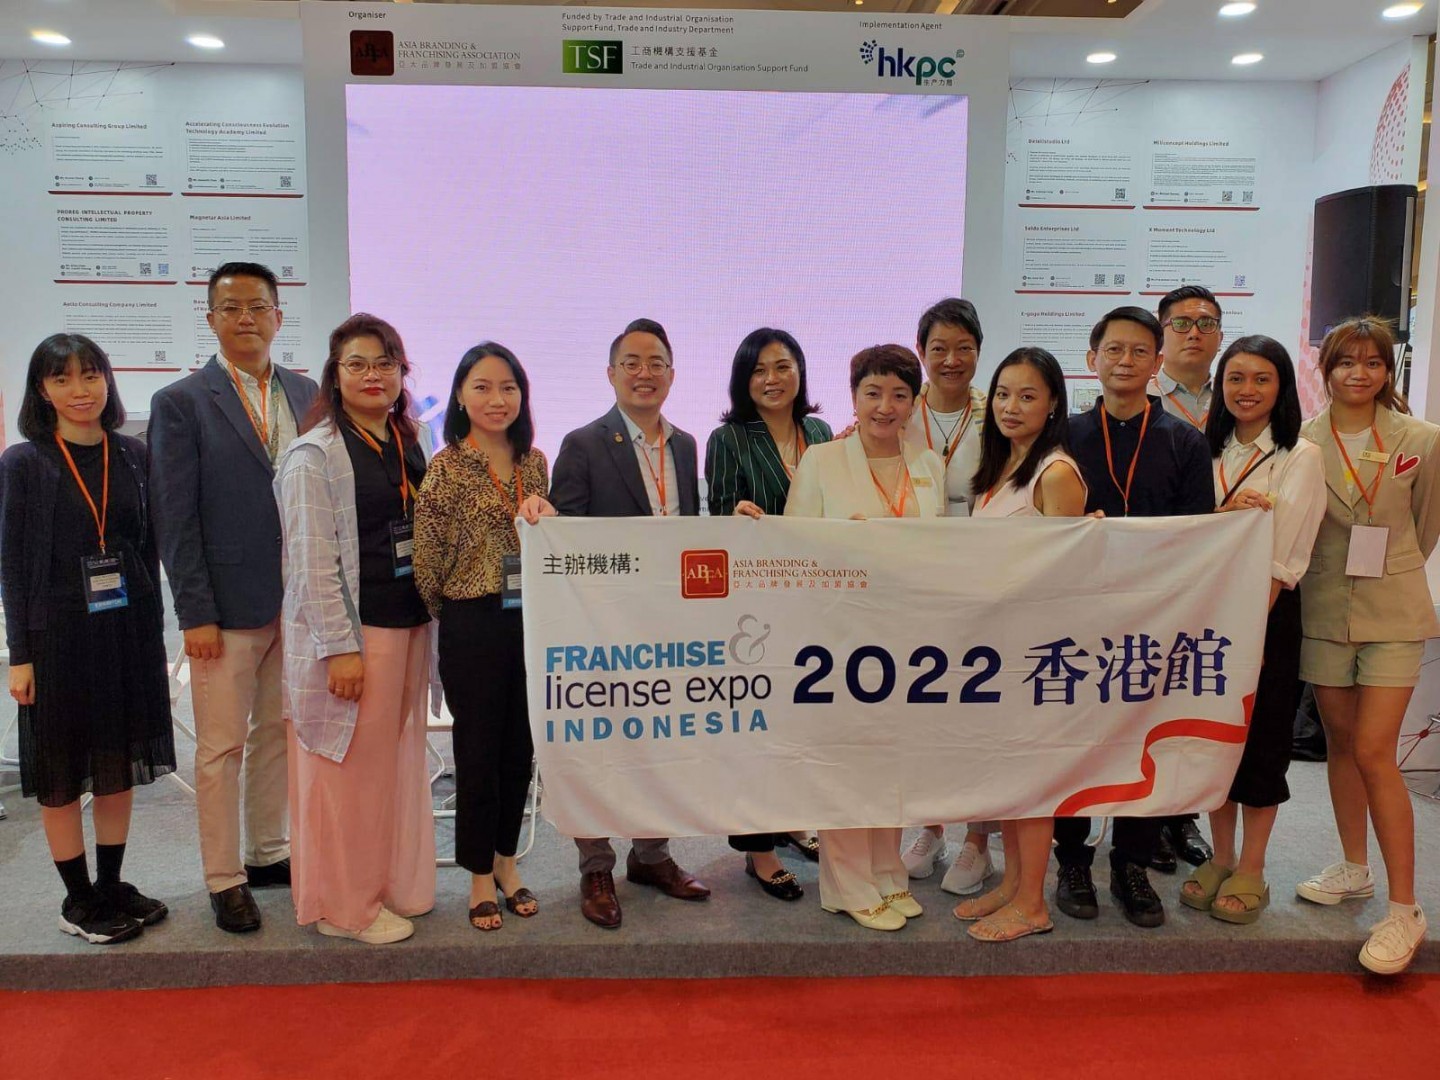 Franchise & License Expo Indonesia 18-20 November, 2022